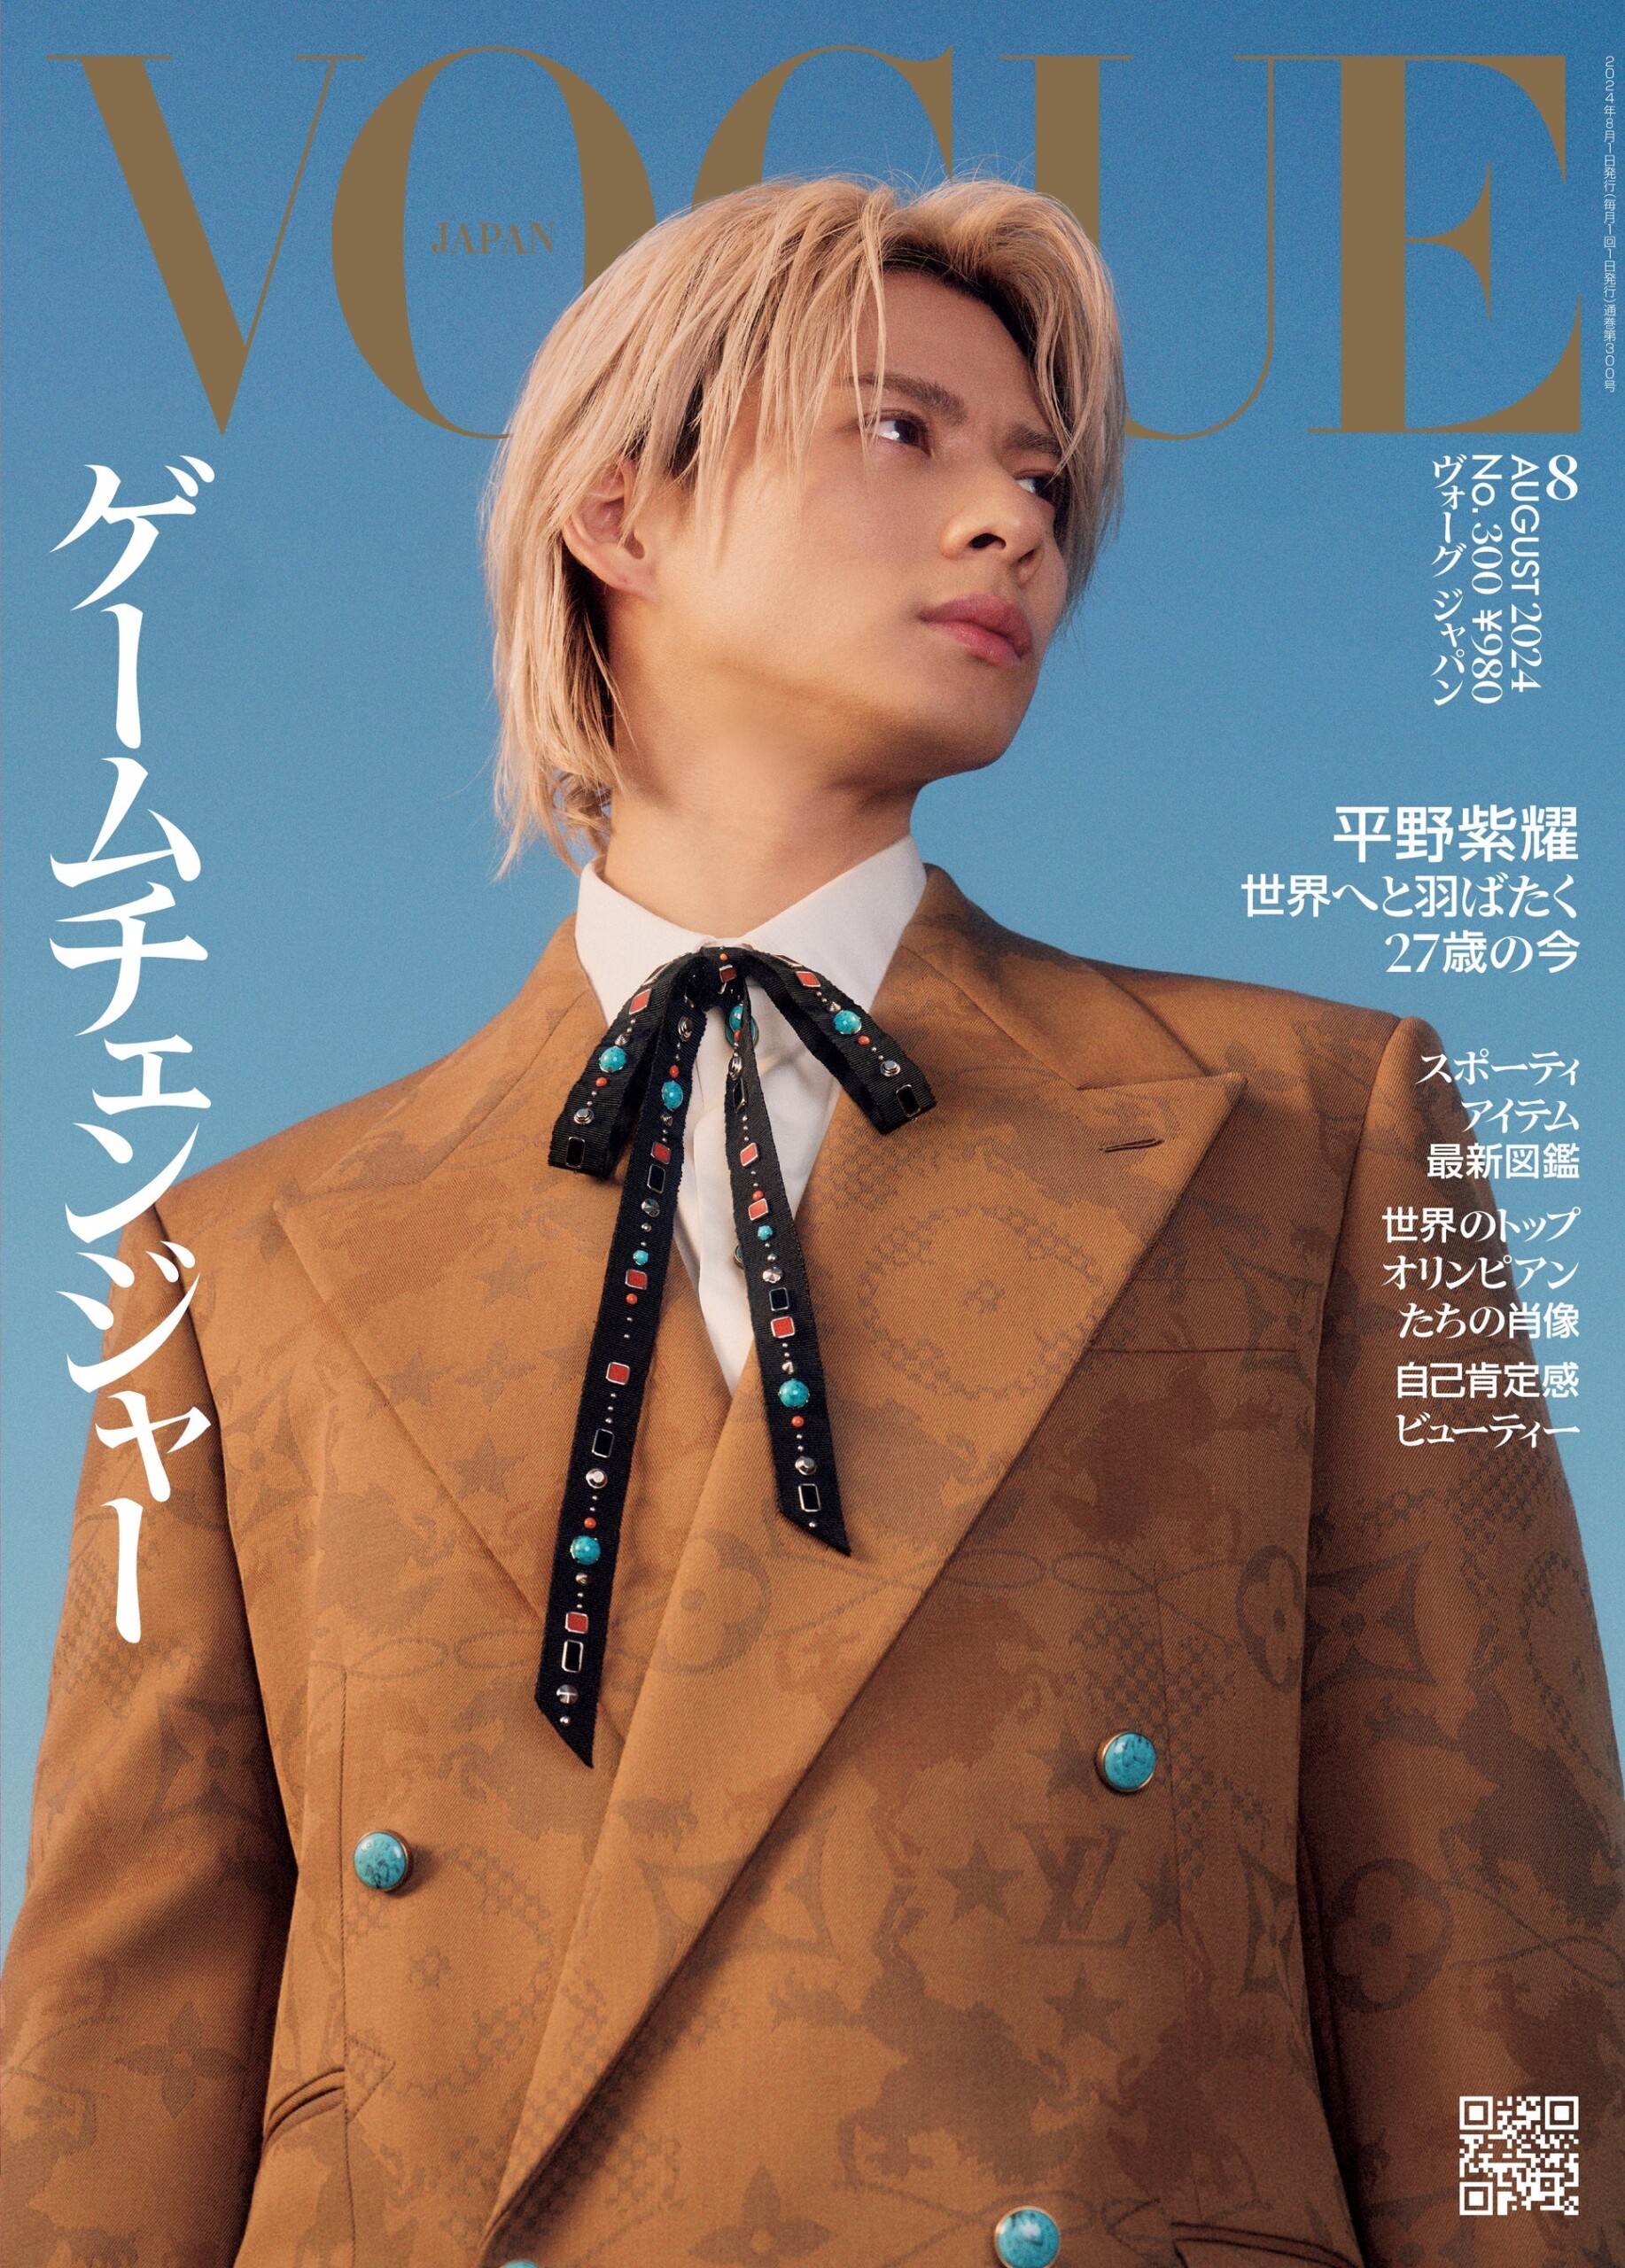 『VOGUE JAPAN』8月号（7月1日発売）「ゲームチェンジャー」をテーマに、平野紫耀が表紙に初登場。世界へと羽...